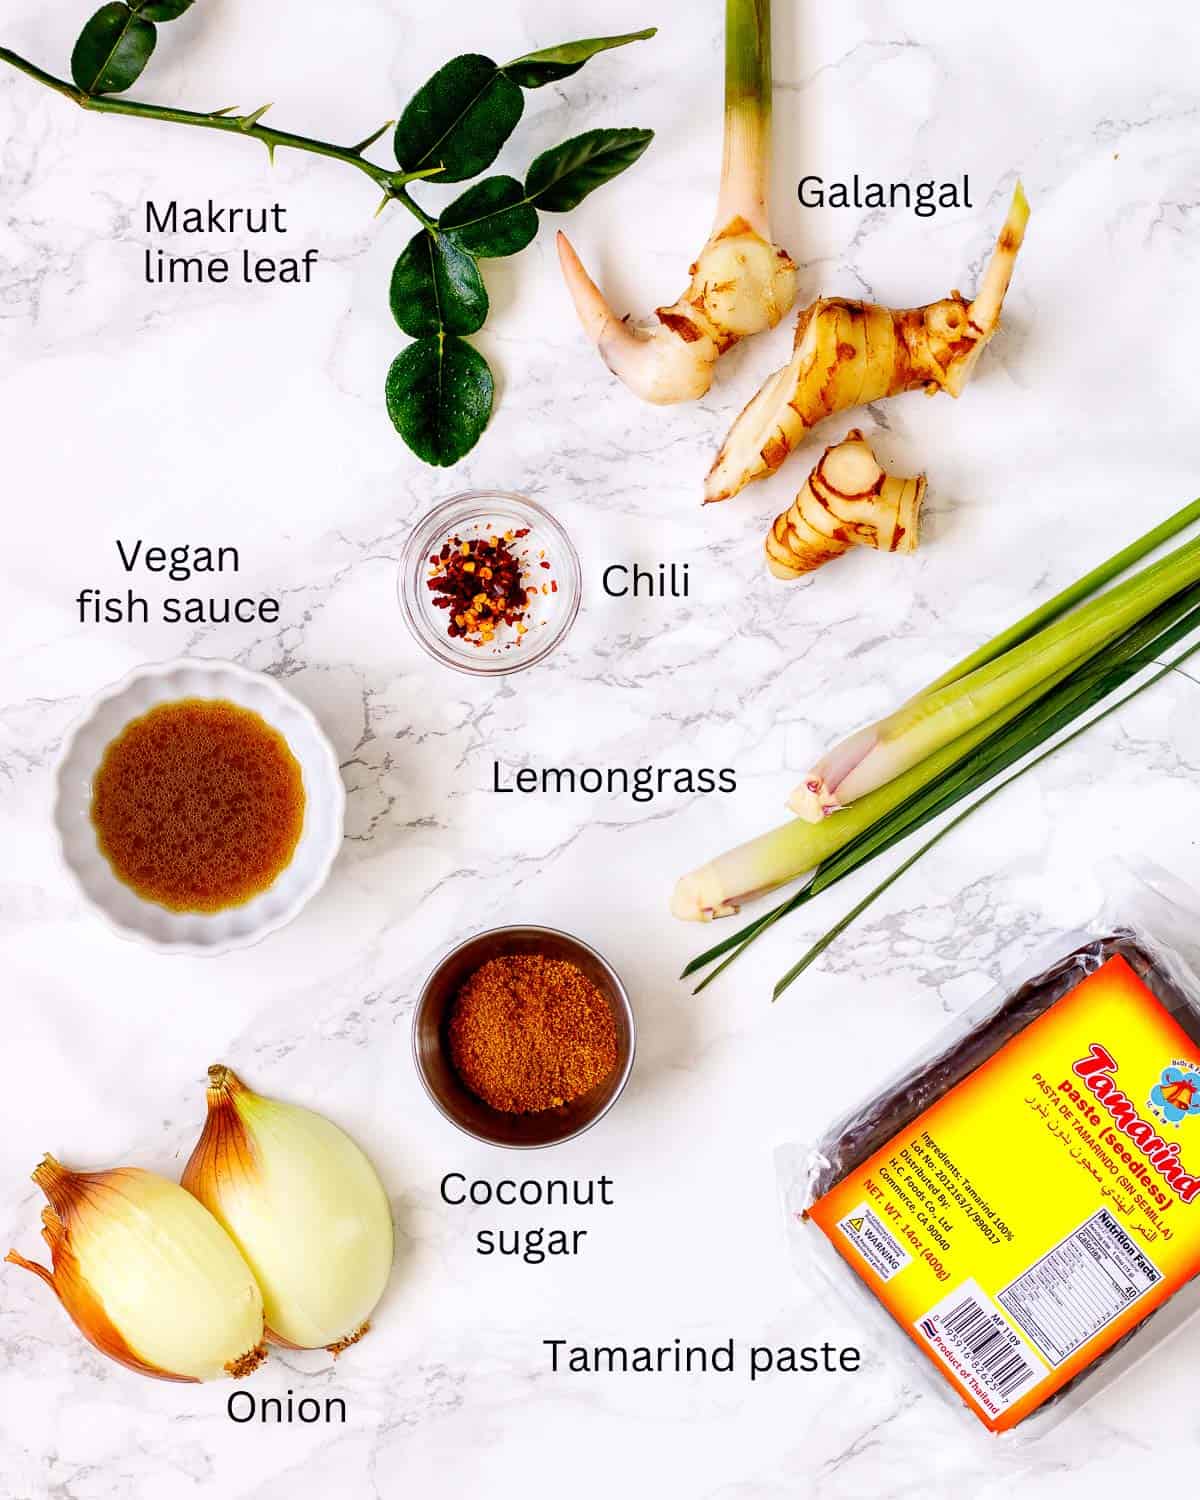 Makrut lime, tamarins, lemongrass, coconut sugar, vegan fish sauce and galangal.